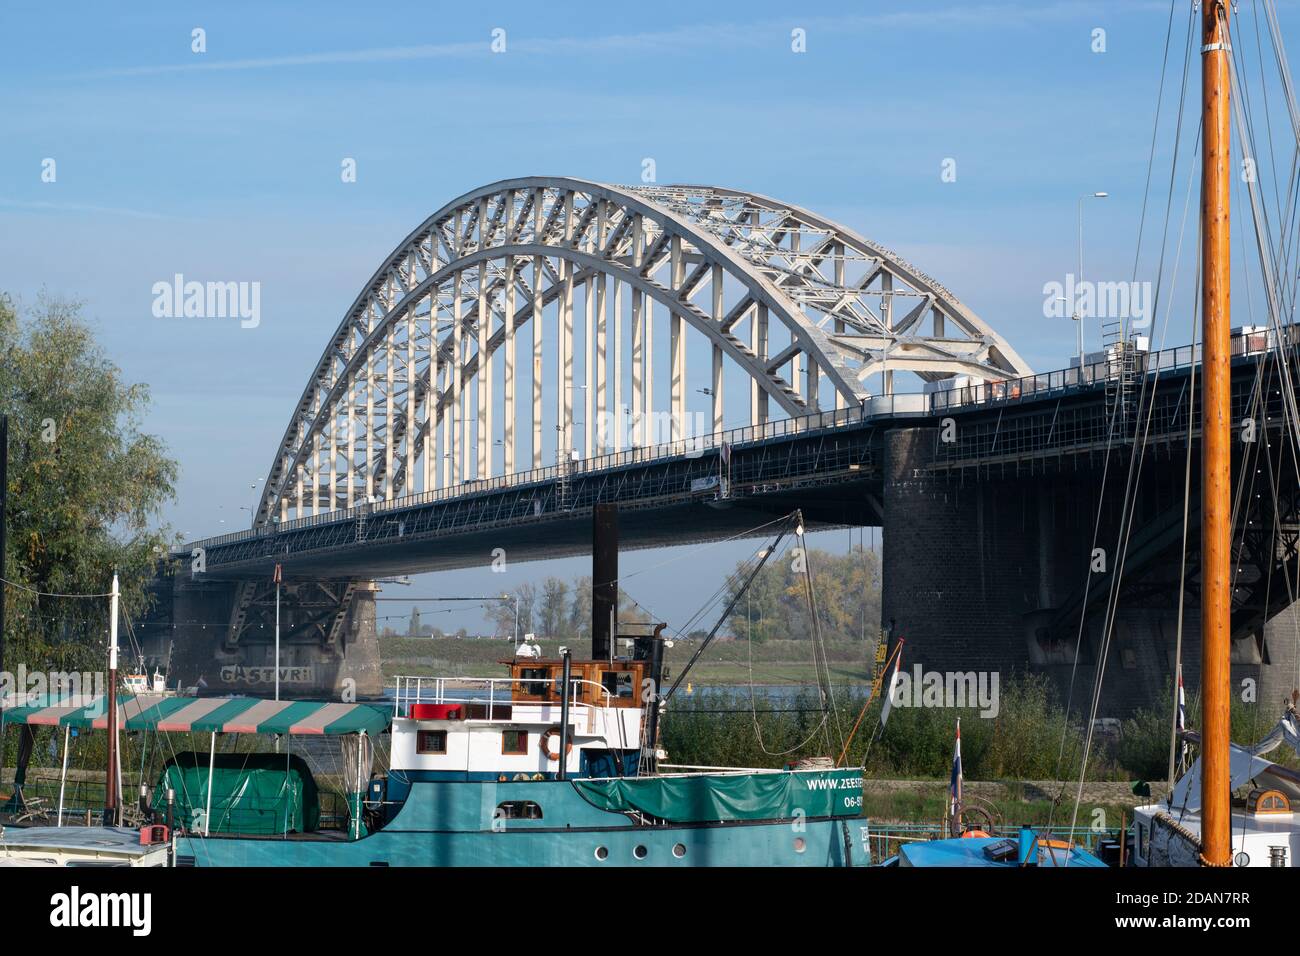 The iconic Dutch Waalbridge over the river Waal in Nijmegen, The Netherlands Stock Photo